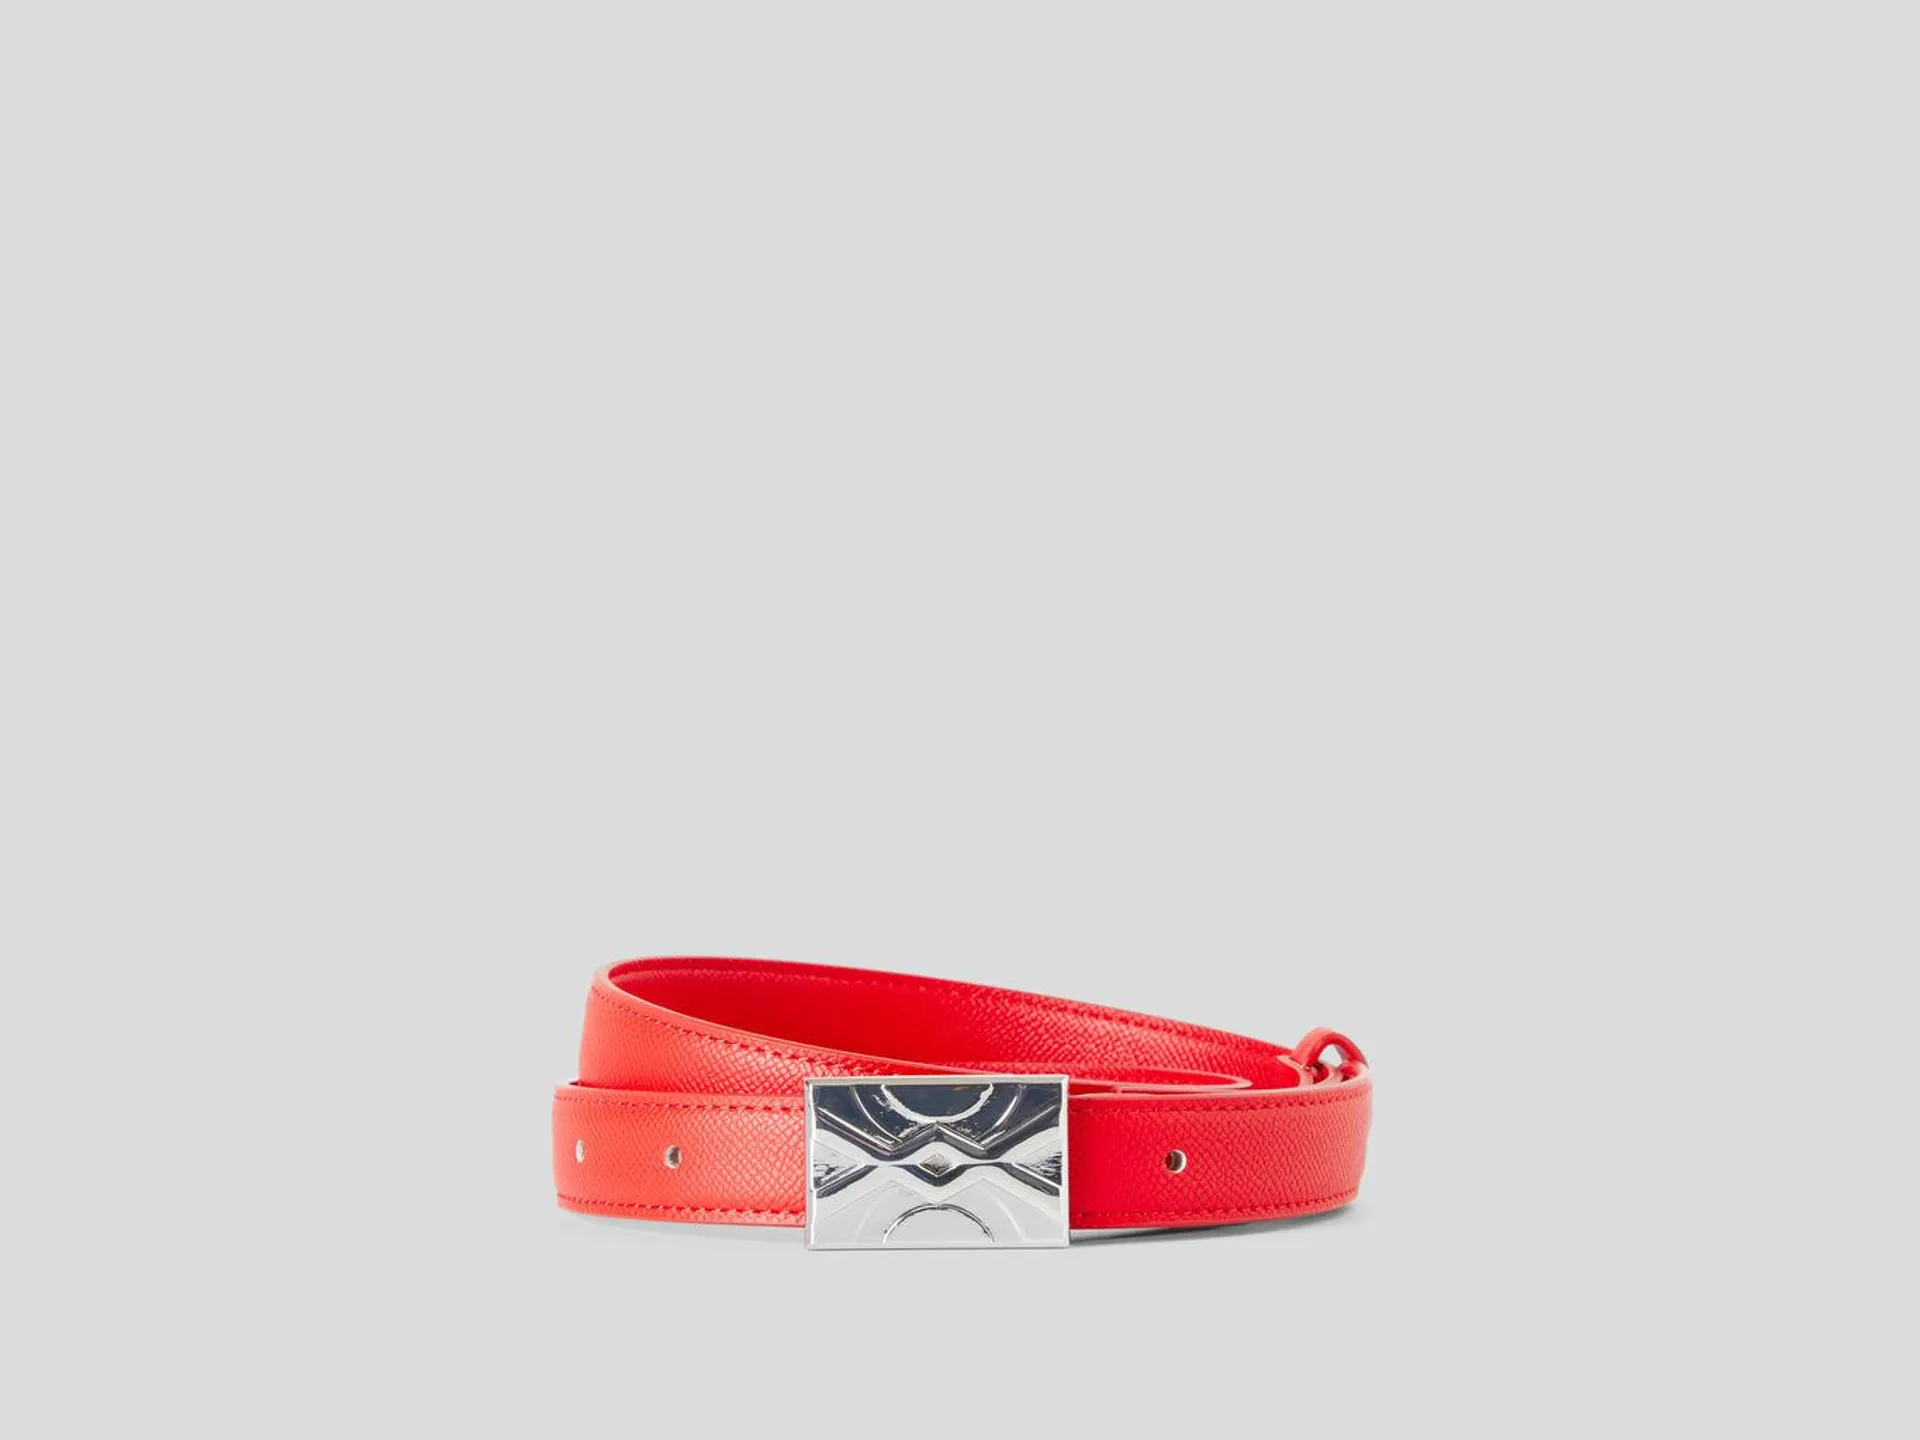 Thin red belt